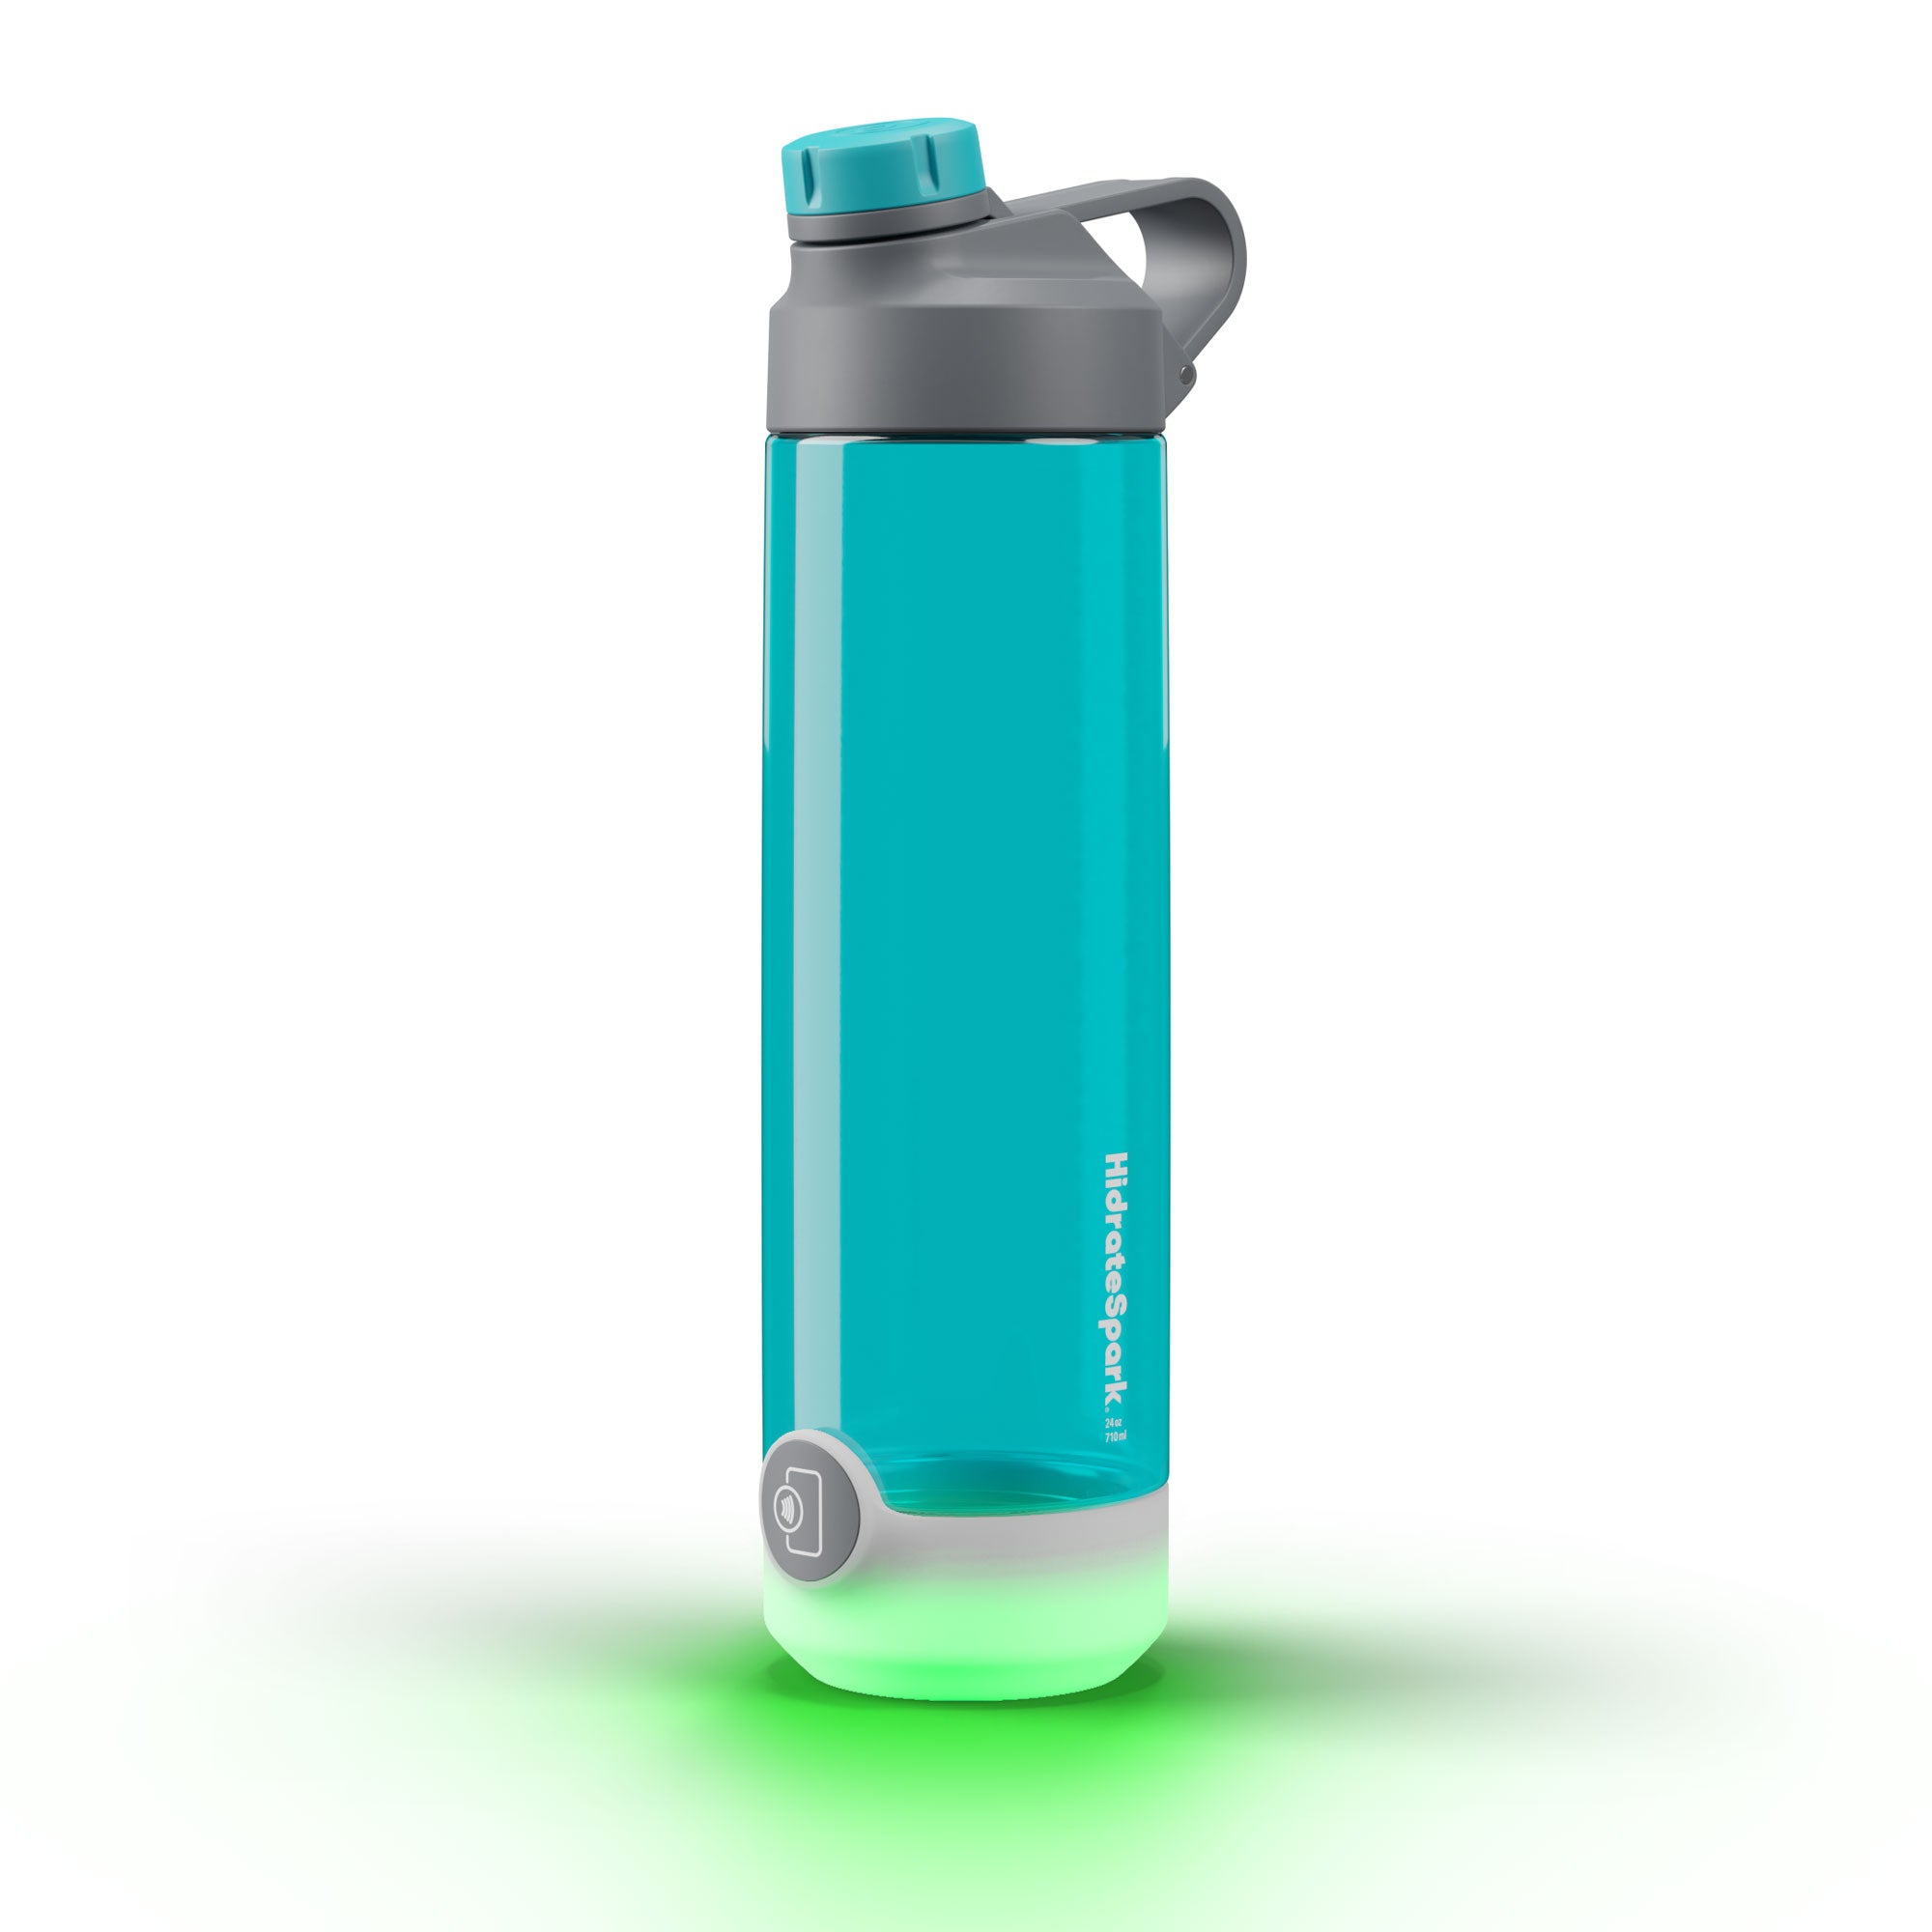 HidrateSpark TAP | 24 oz / 710 ml Tritan Plastic Smart Water Bottle Chug Lid With Free Hydration Tracker & Drink Reminder App